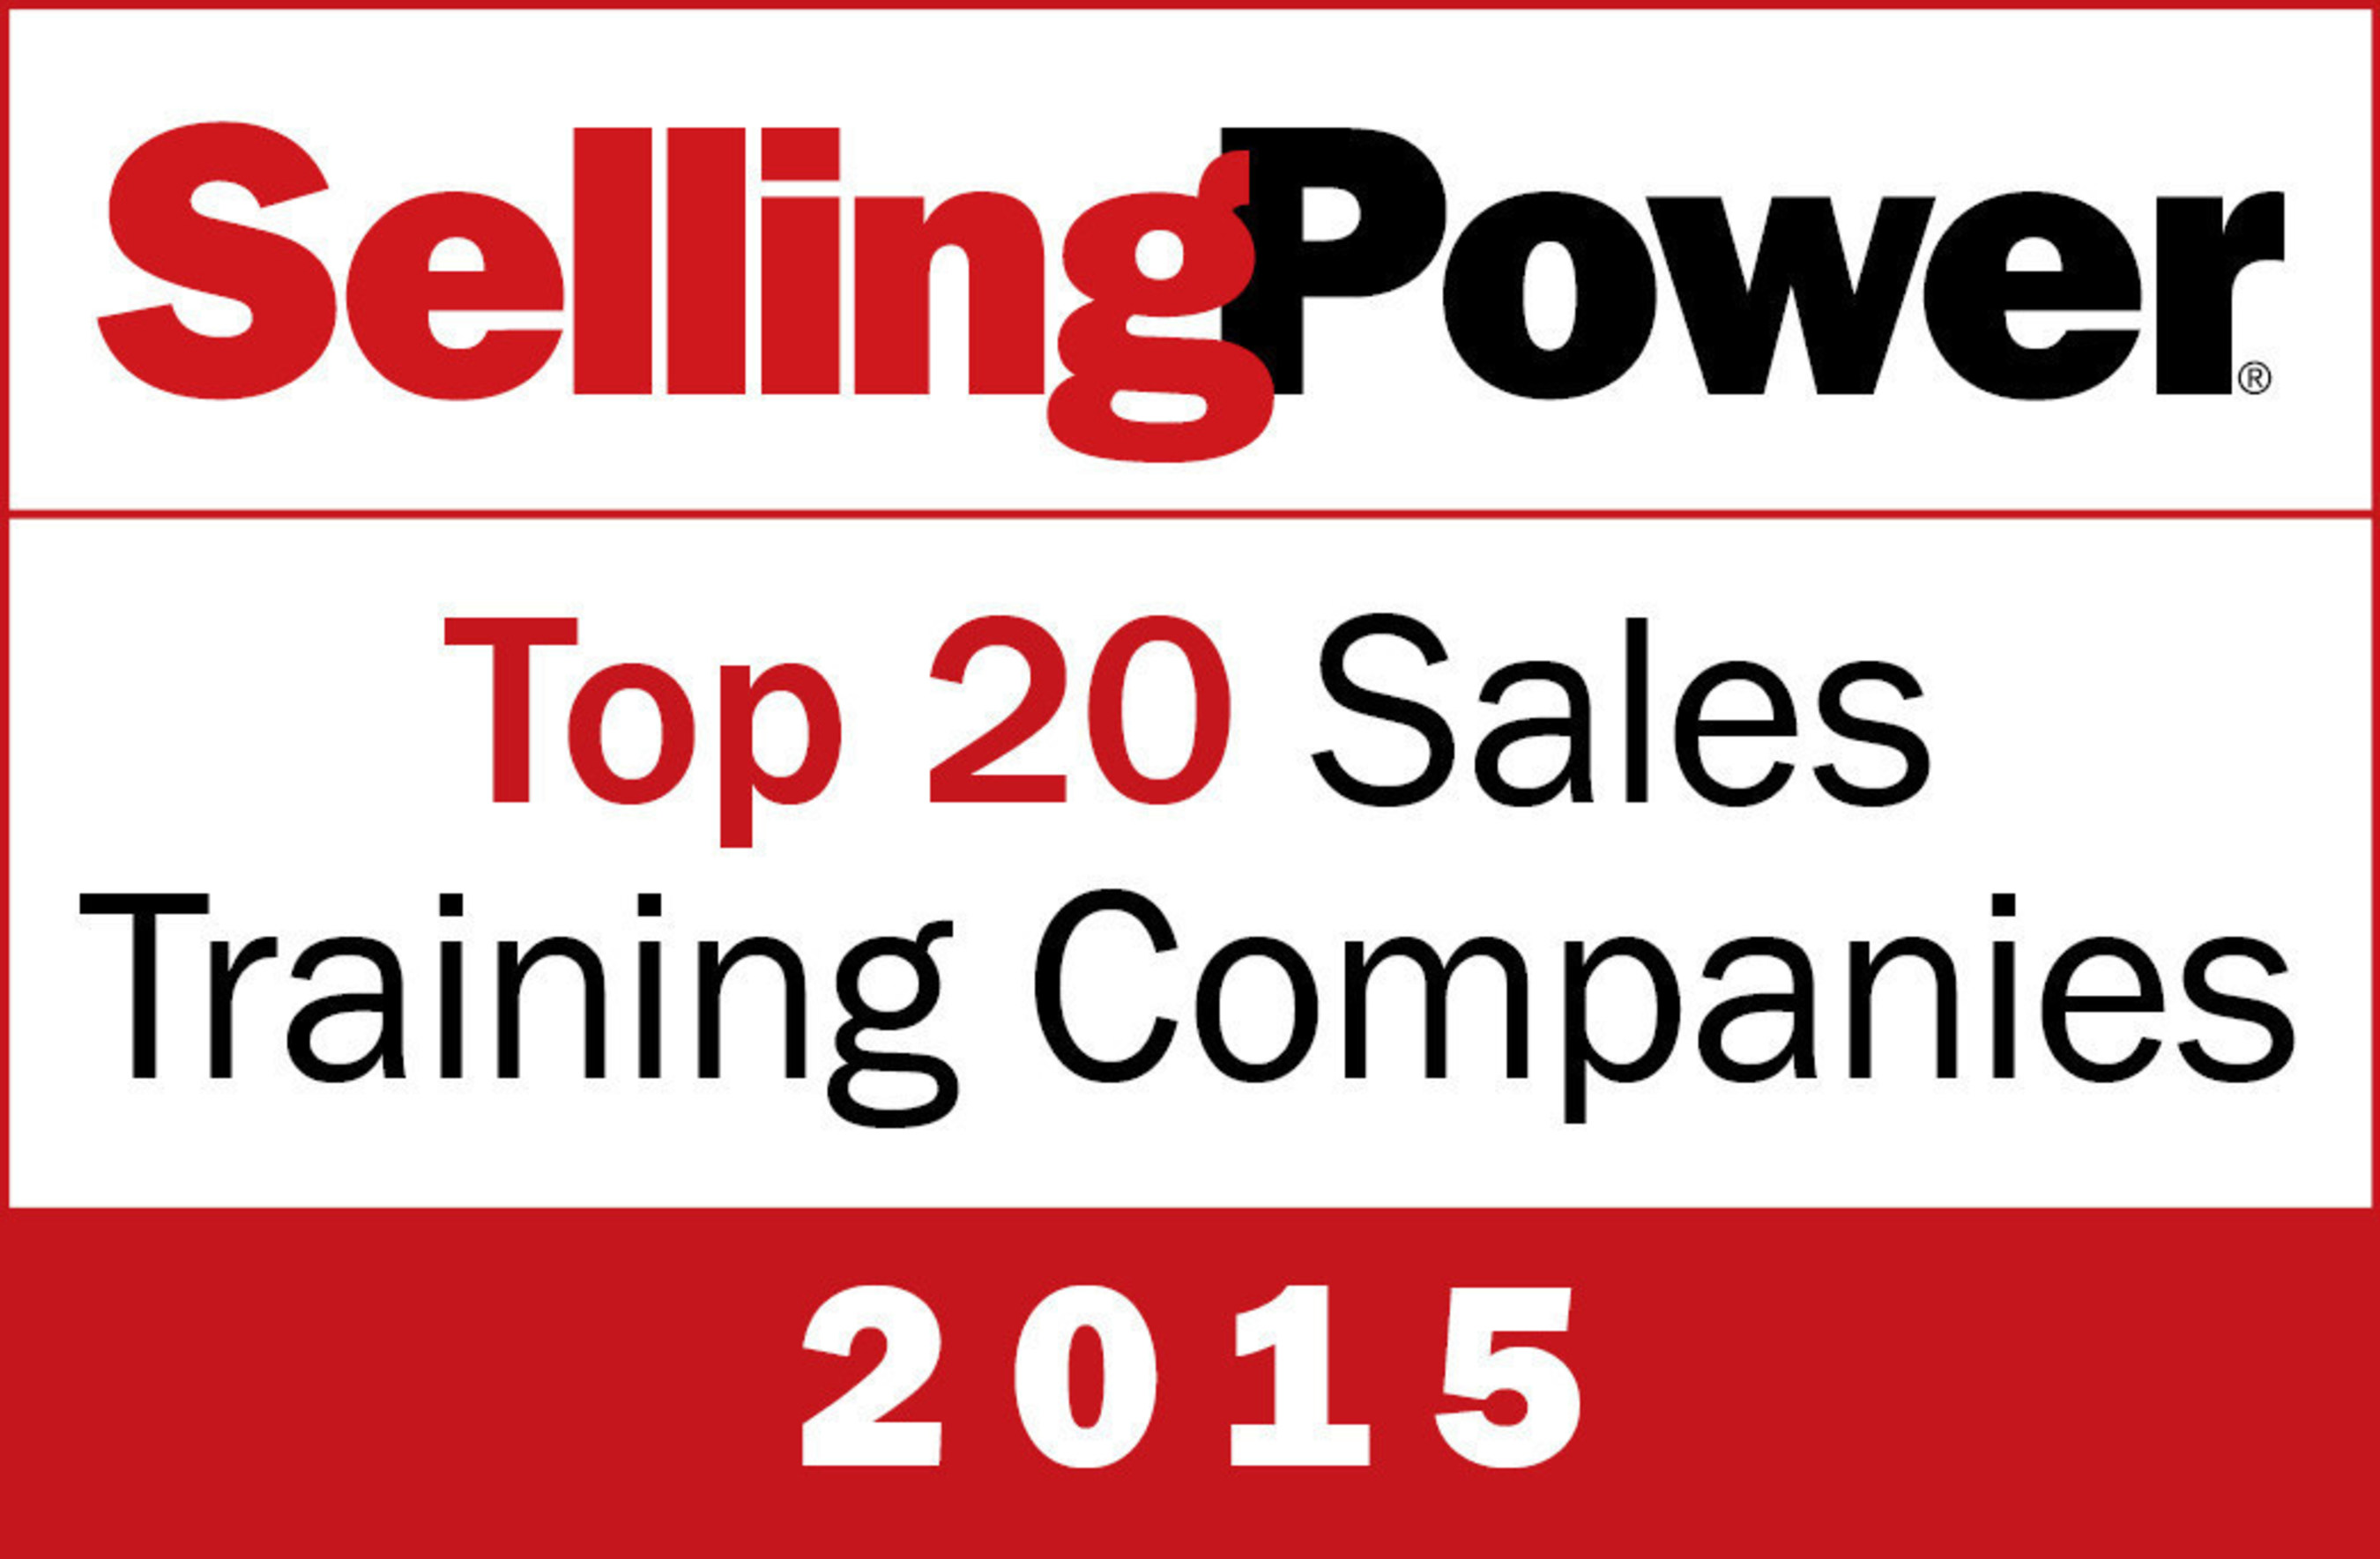 Selling Power Top 20 Sales Training Companies logo